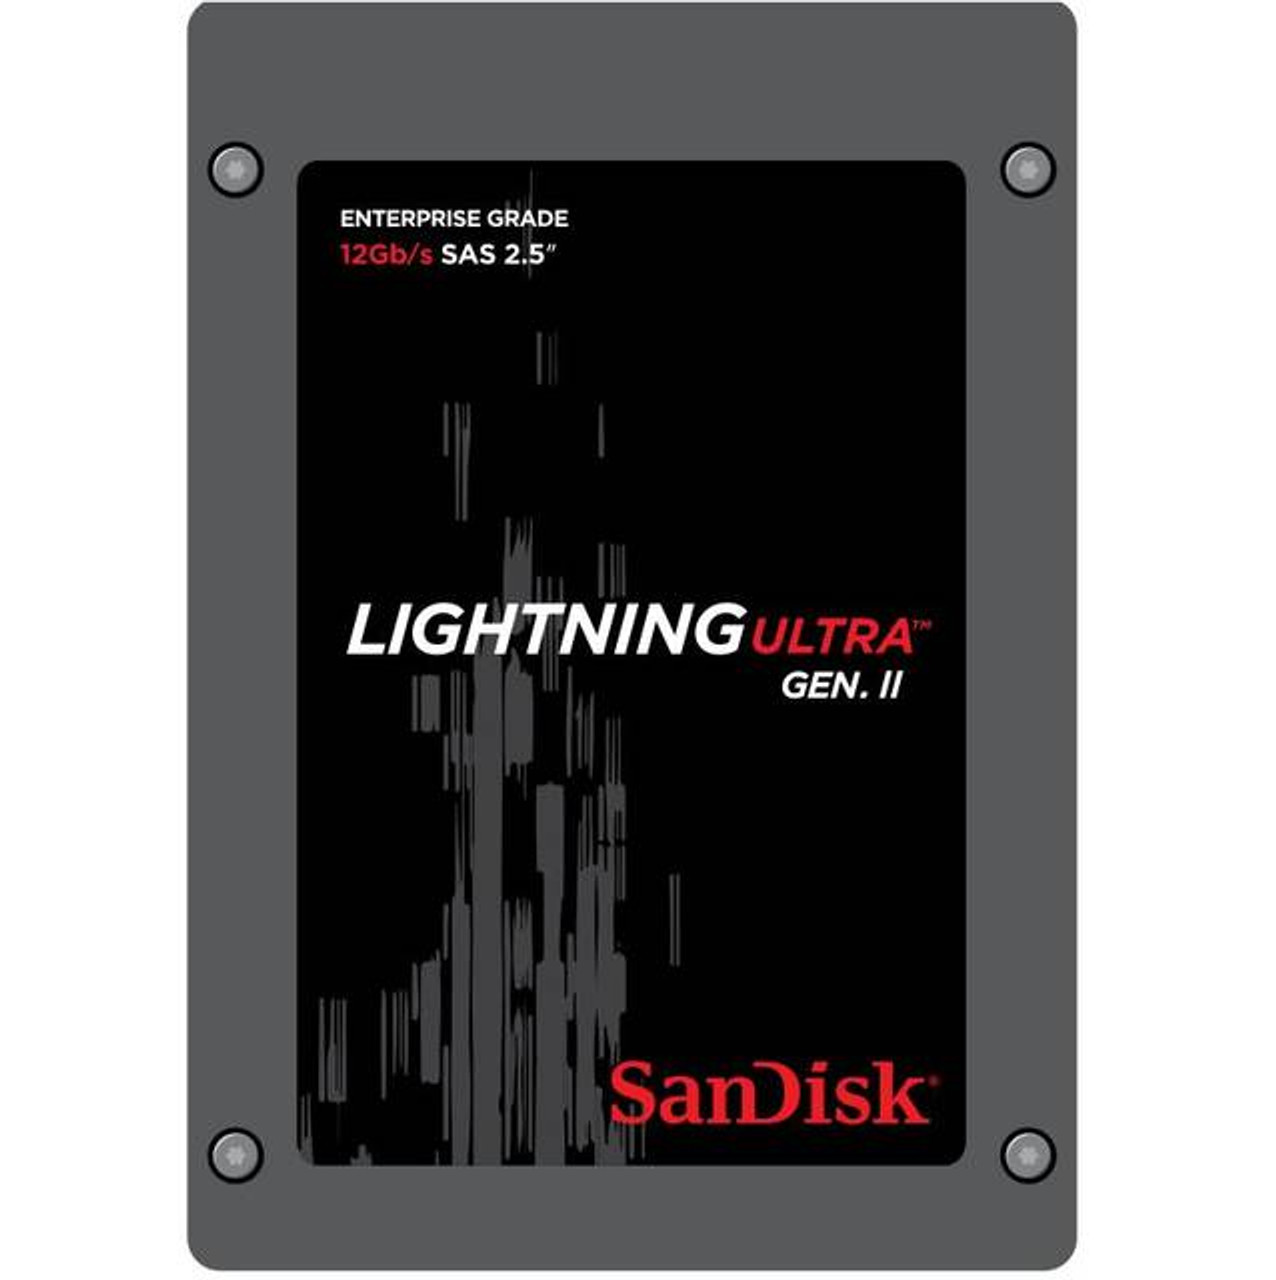 SanDisk Lightning Ultra Gen. II SDLTMDKW-200G-5CA1 200GB 2.5 inch SAS3 Solid State Drive (SLC)